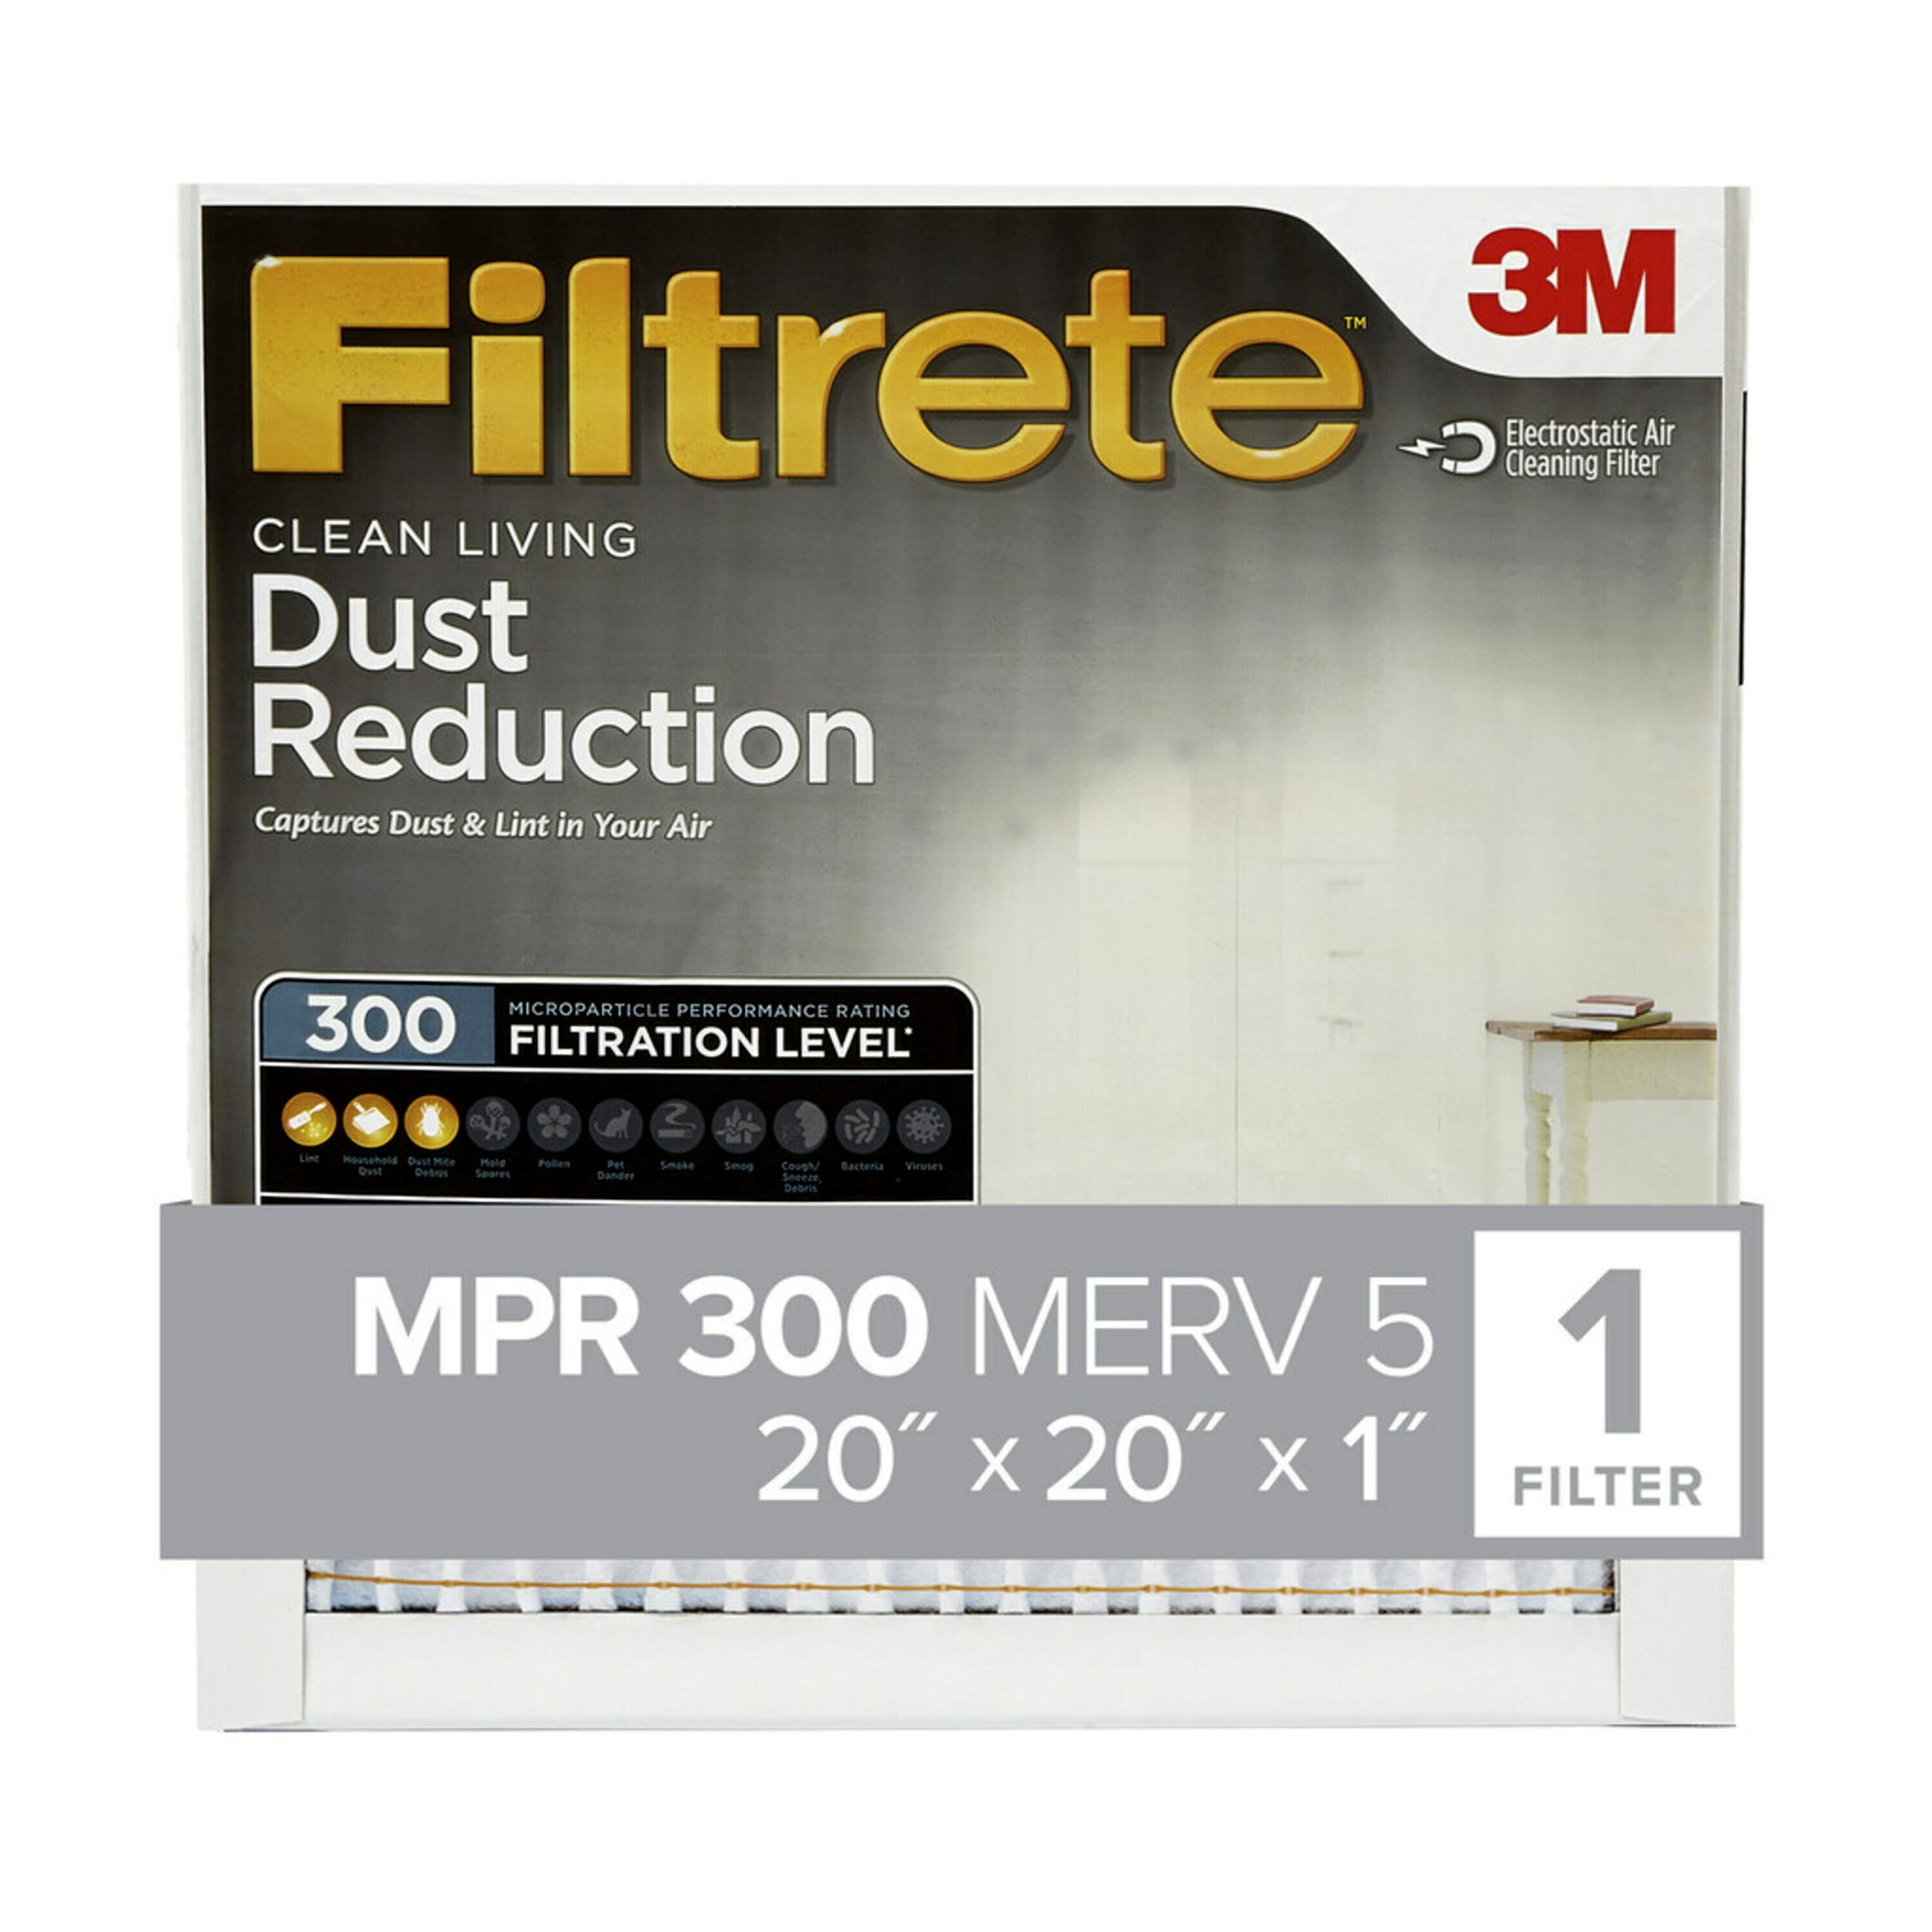 Filtrete 20x20x1, MERV 5, Dust Reduction HVAC Furnace Air Filter, 300 MPR, 1 Filter